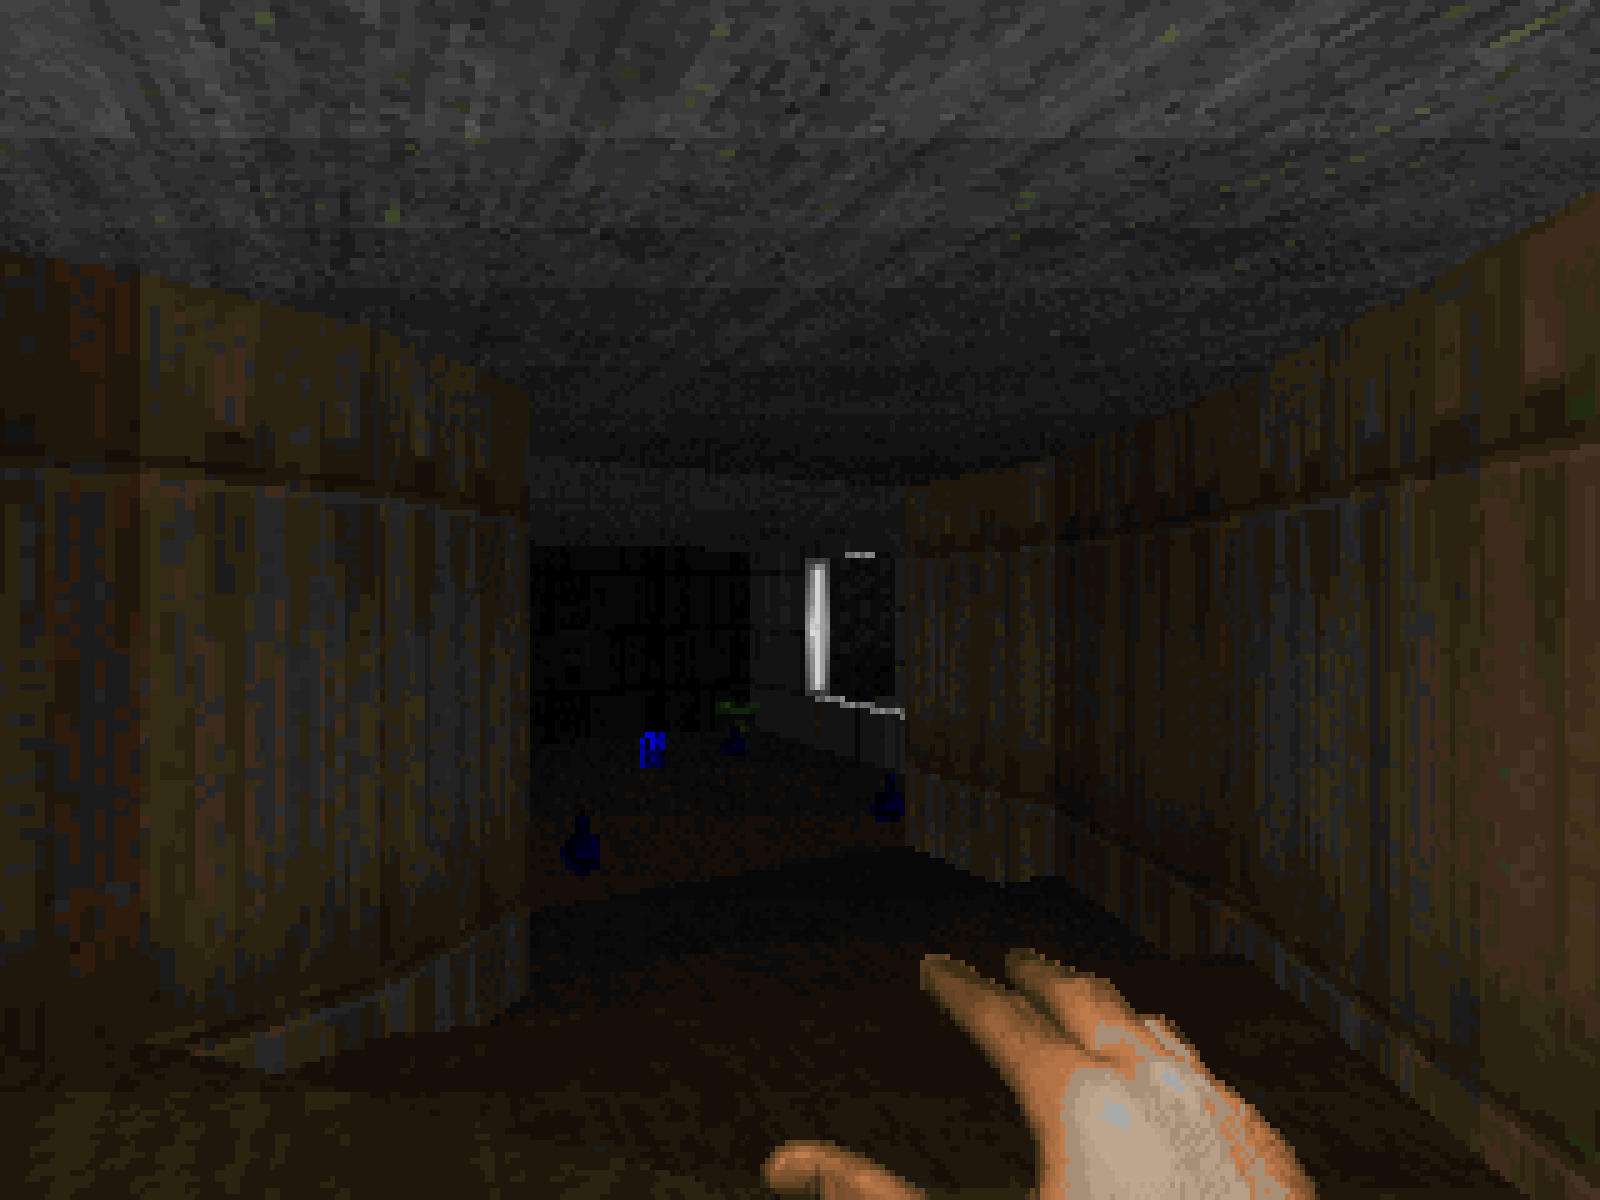 A screenshot of Doom showing the player standing in a dark corridor